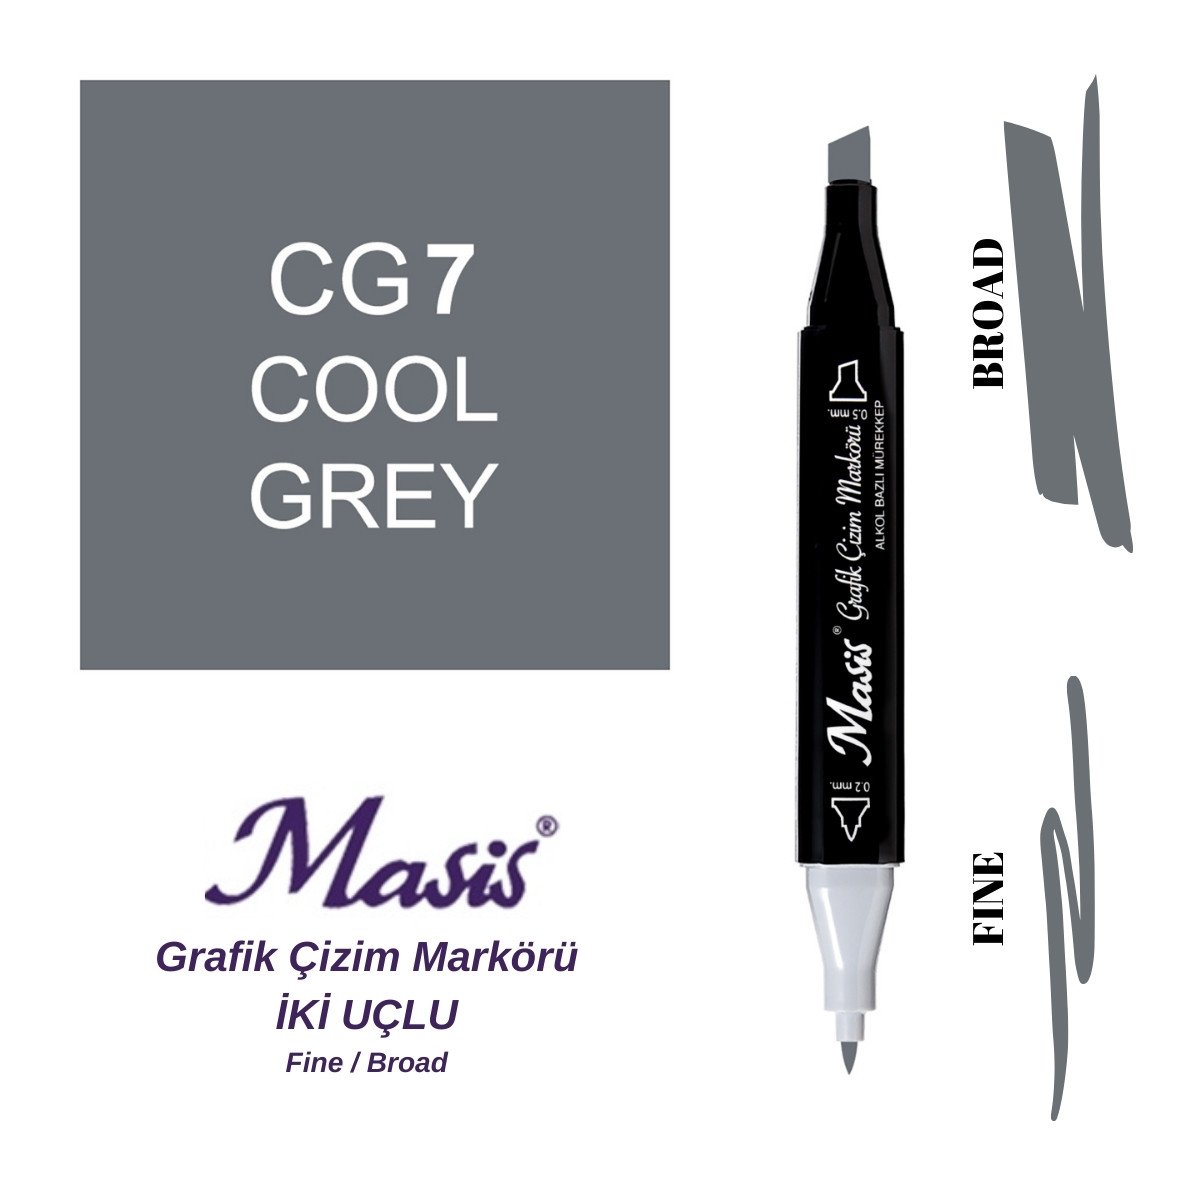 Masis Twin Çift Uçlu Marker Kalemi CG7 Cool Grey